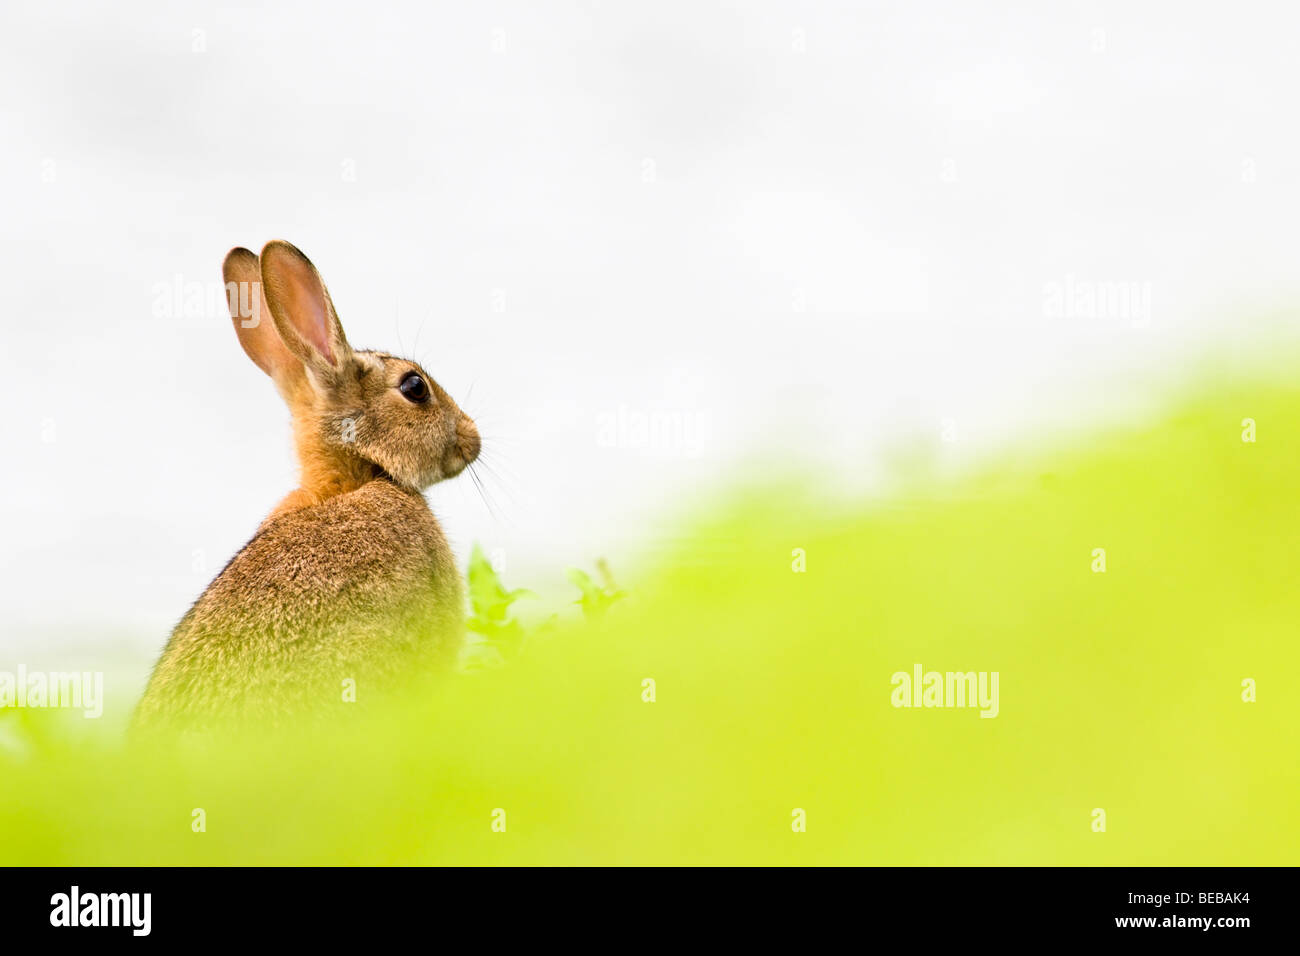 Alert Rabbit on grass bank Stock Photo